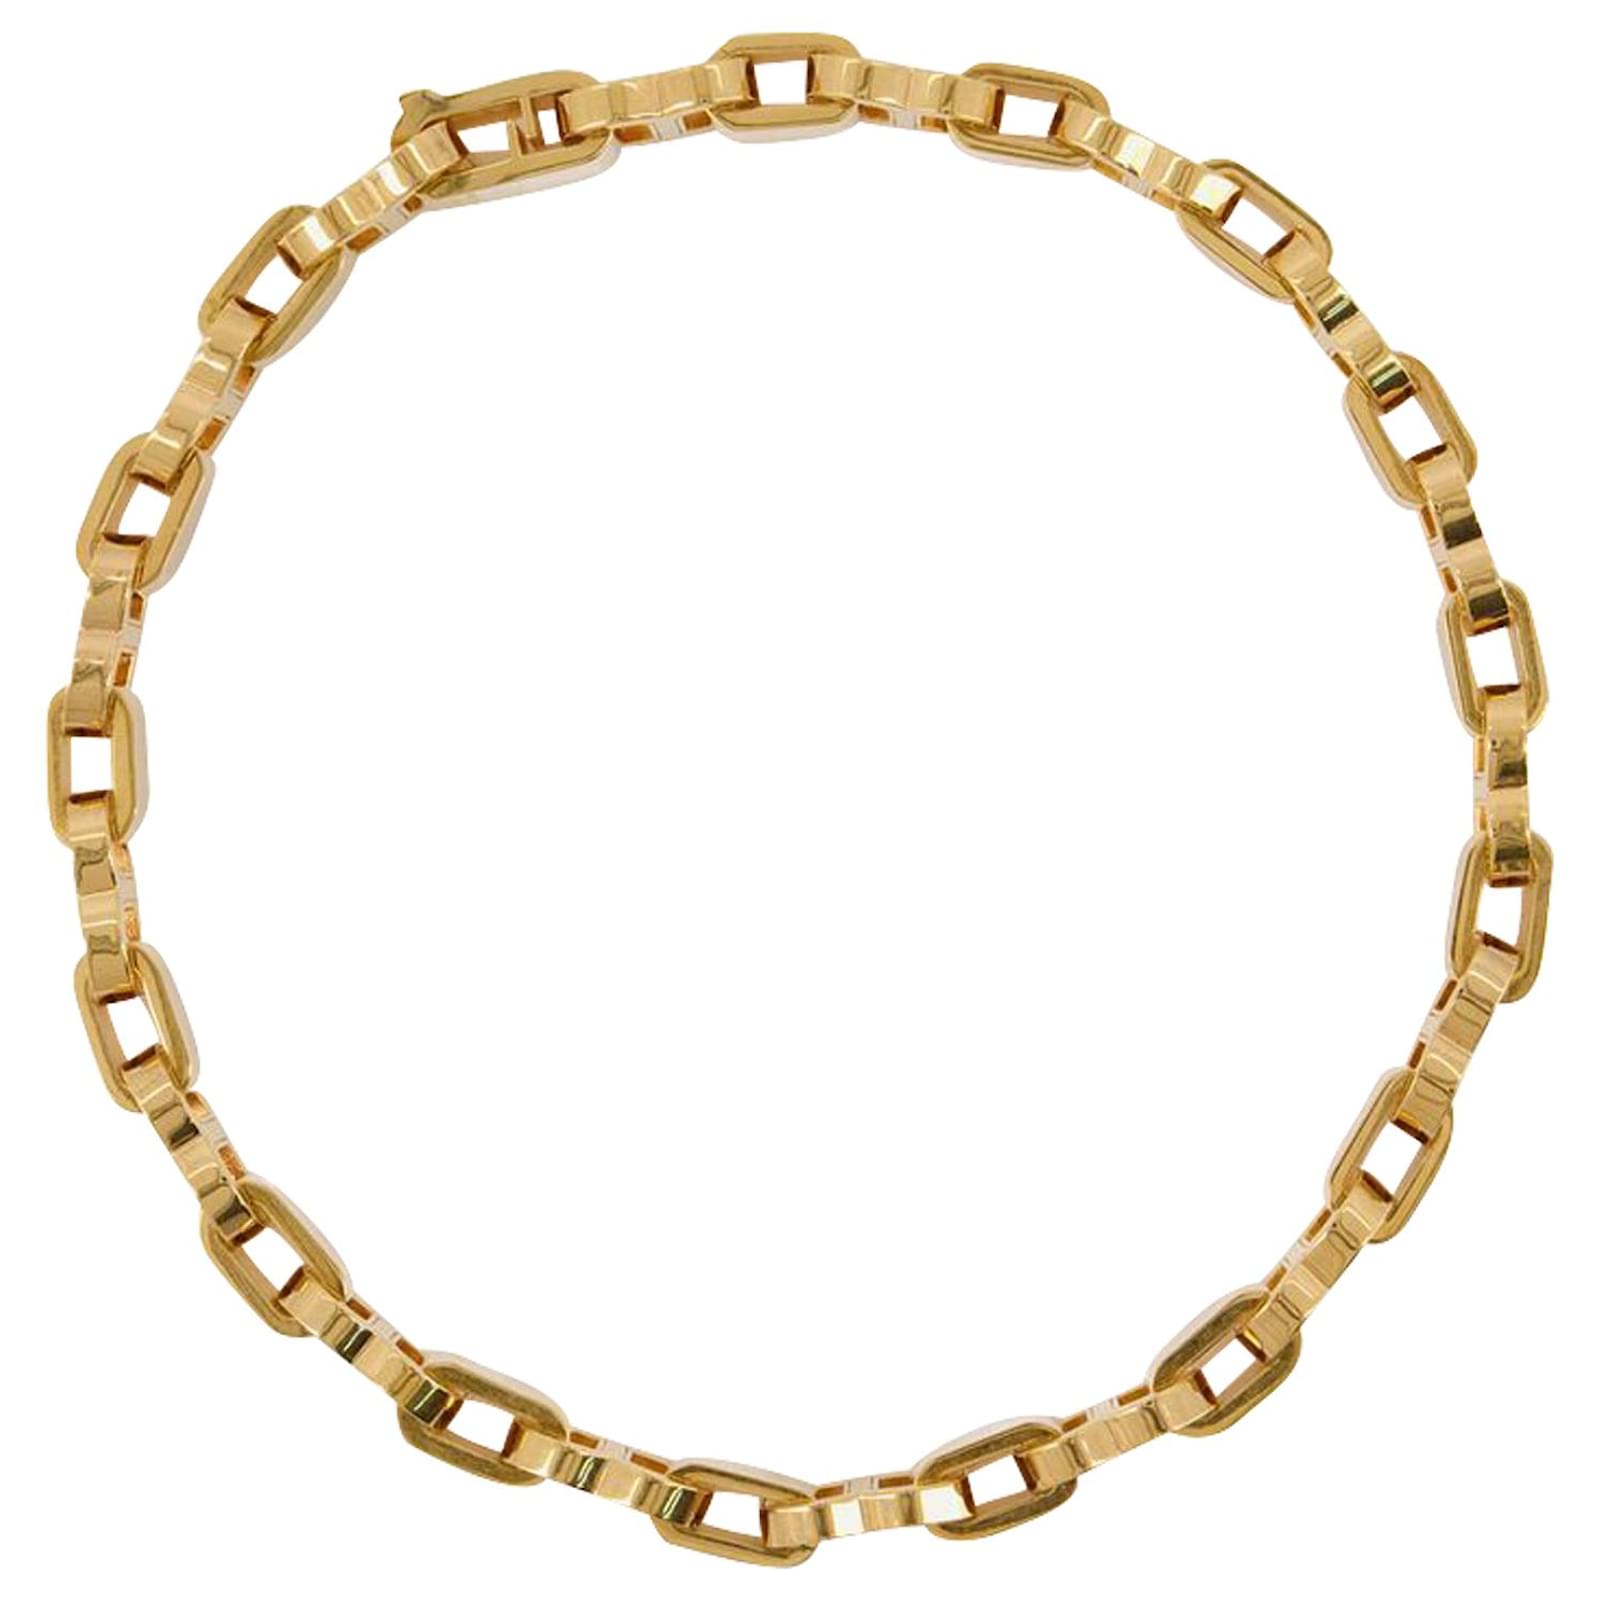 Balenciaga Zodiac Sign Gemini Necklace in Metallic